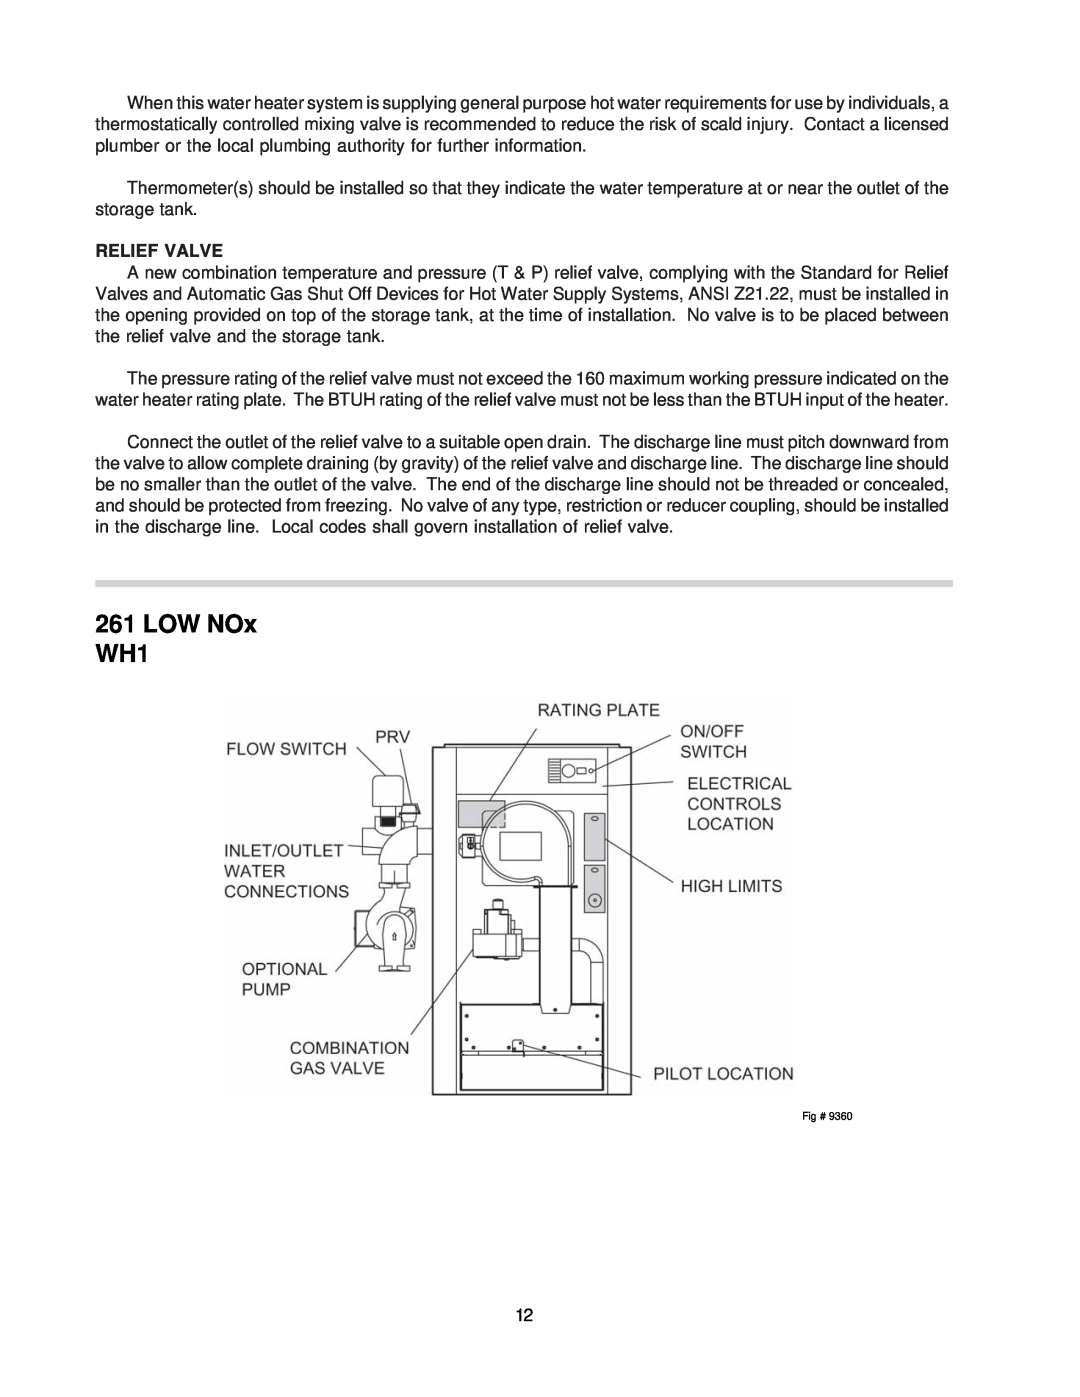 Raypak 260-401 manual LOW NOx WH1, Relief Valve 